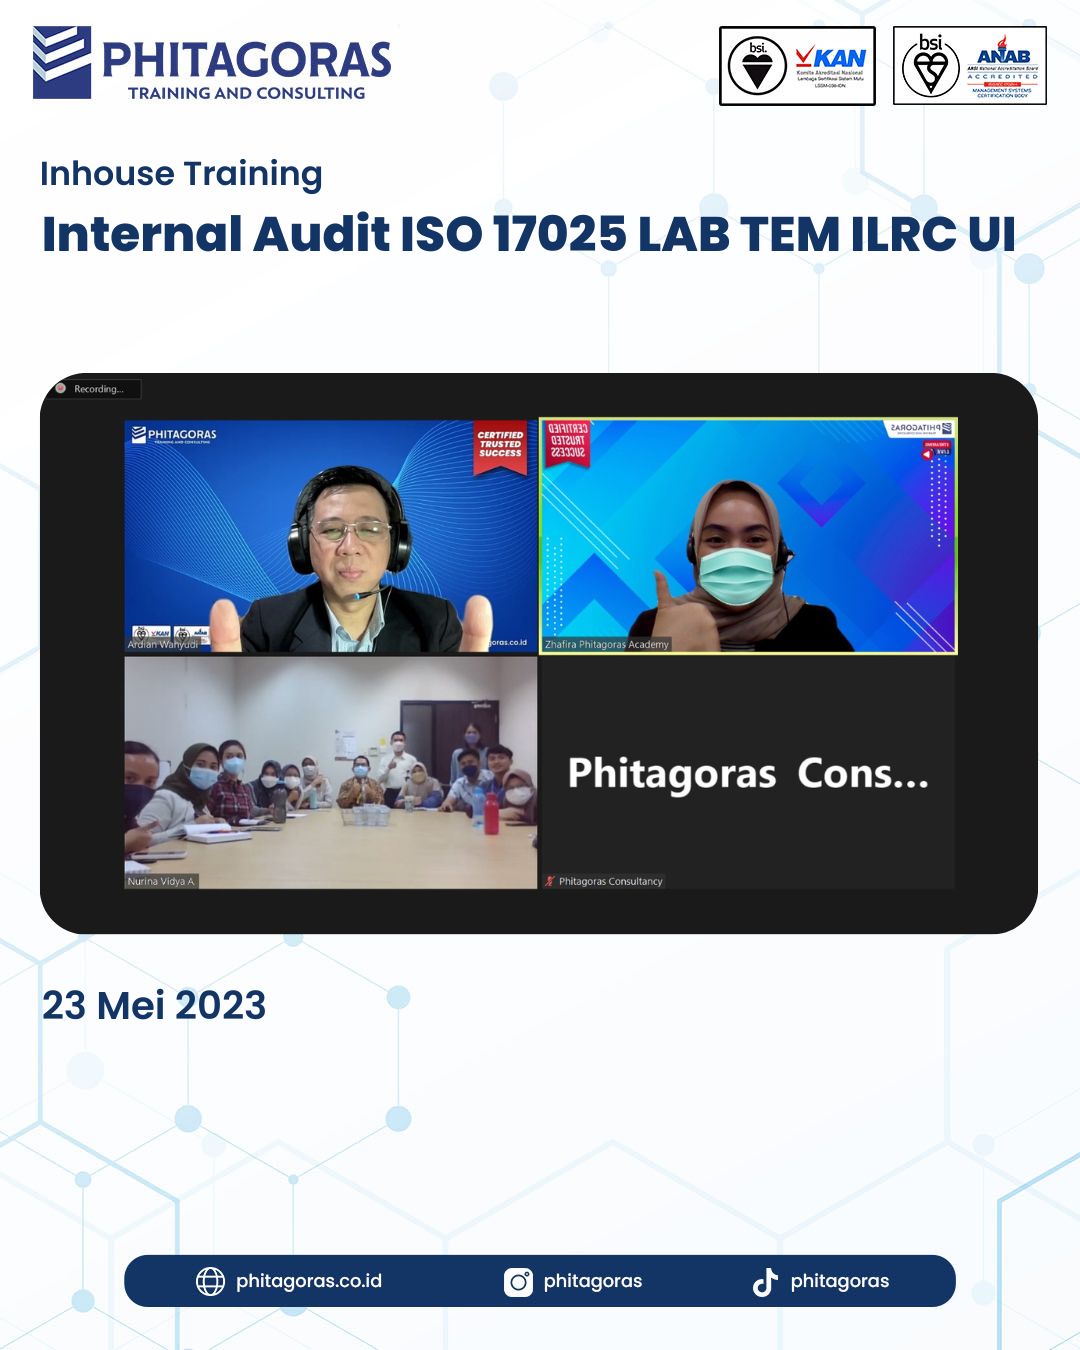 Inhouse Training Internal Audit ISO 17025 LAB TEM ILRC UI